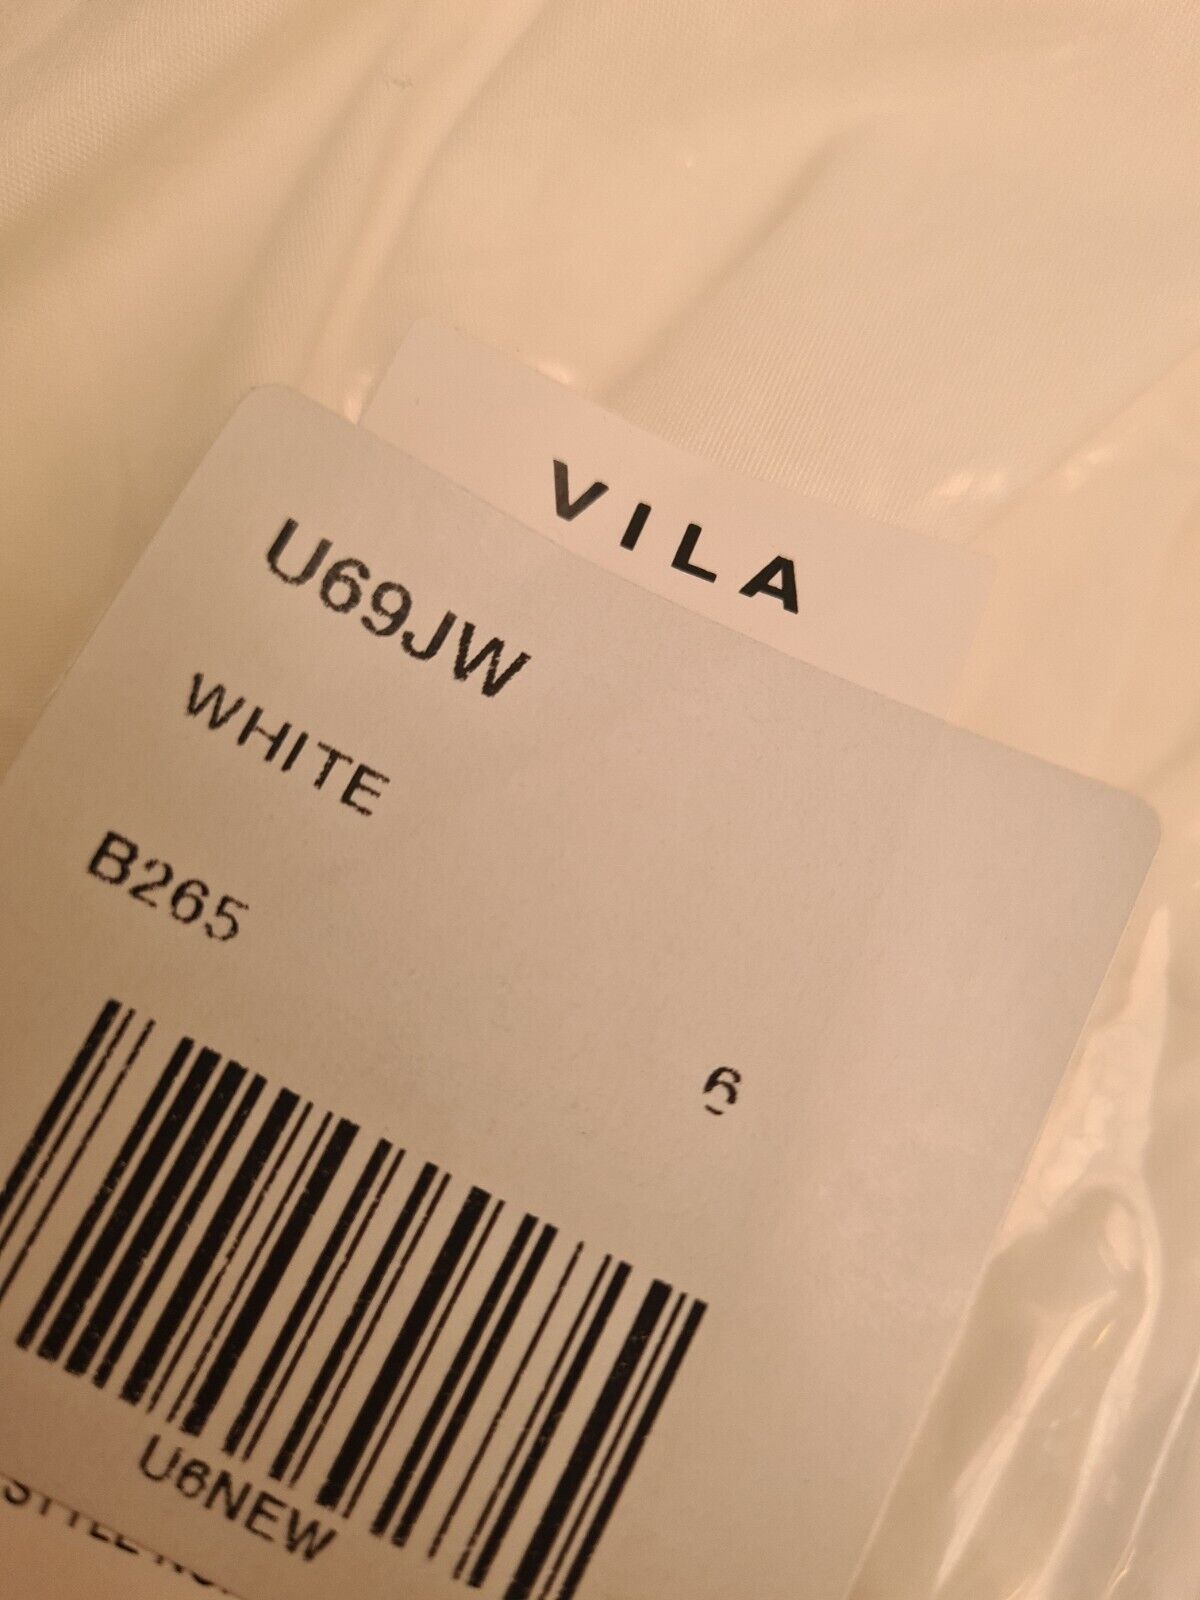 Vila White Vigimas Shirt Size 6 **** V283